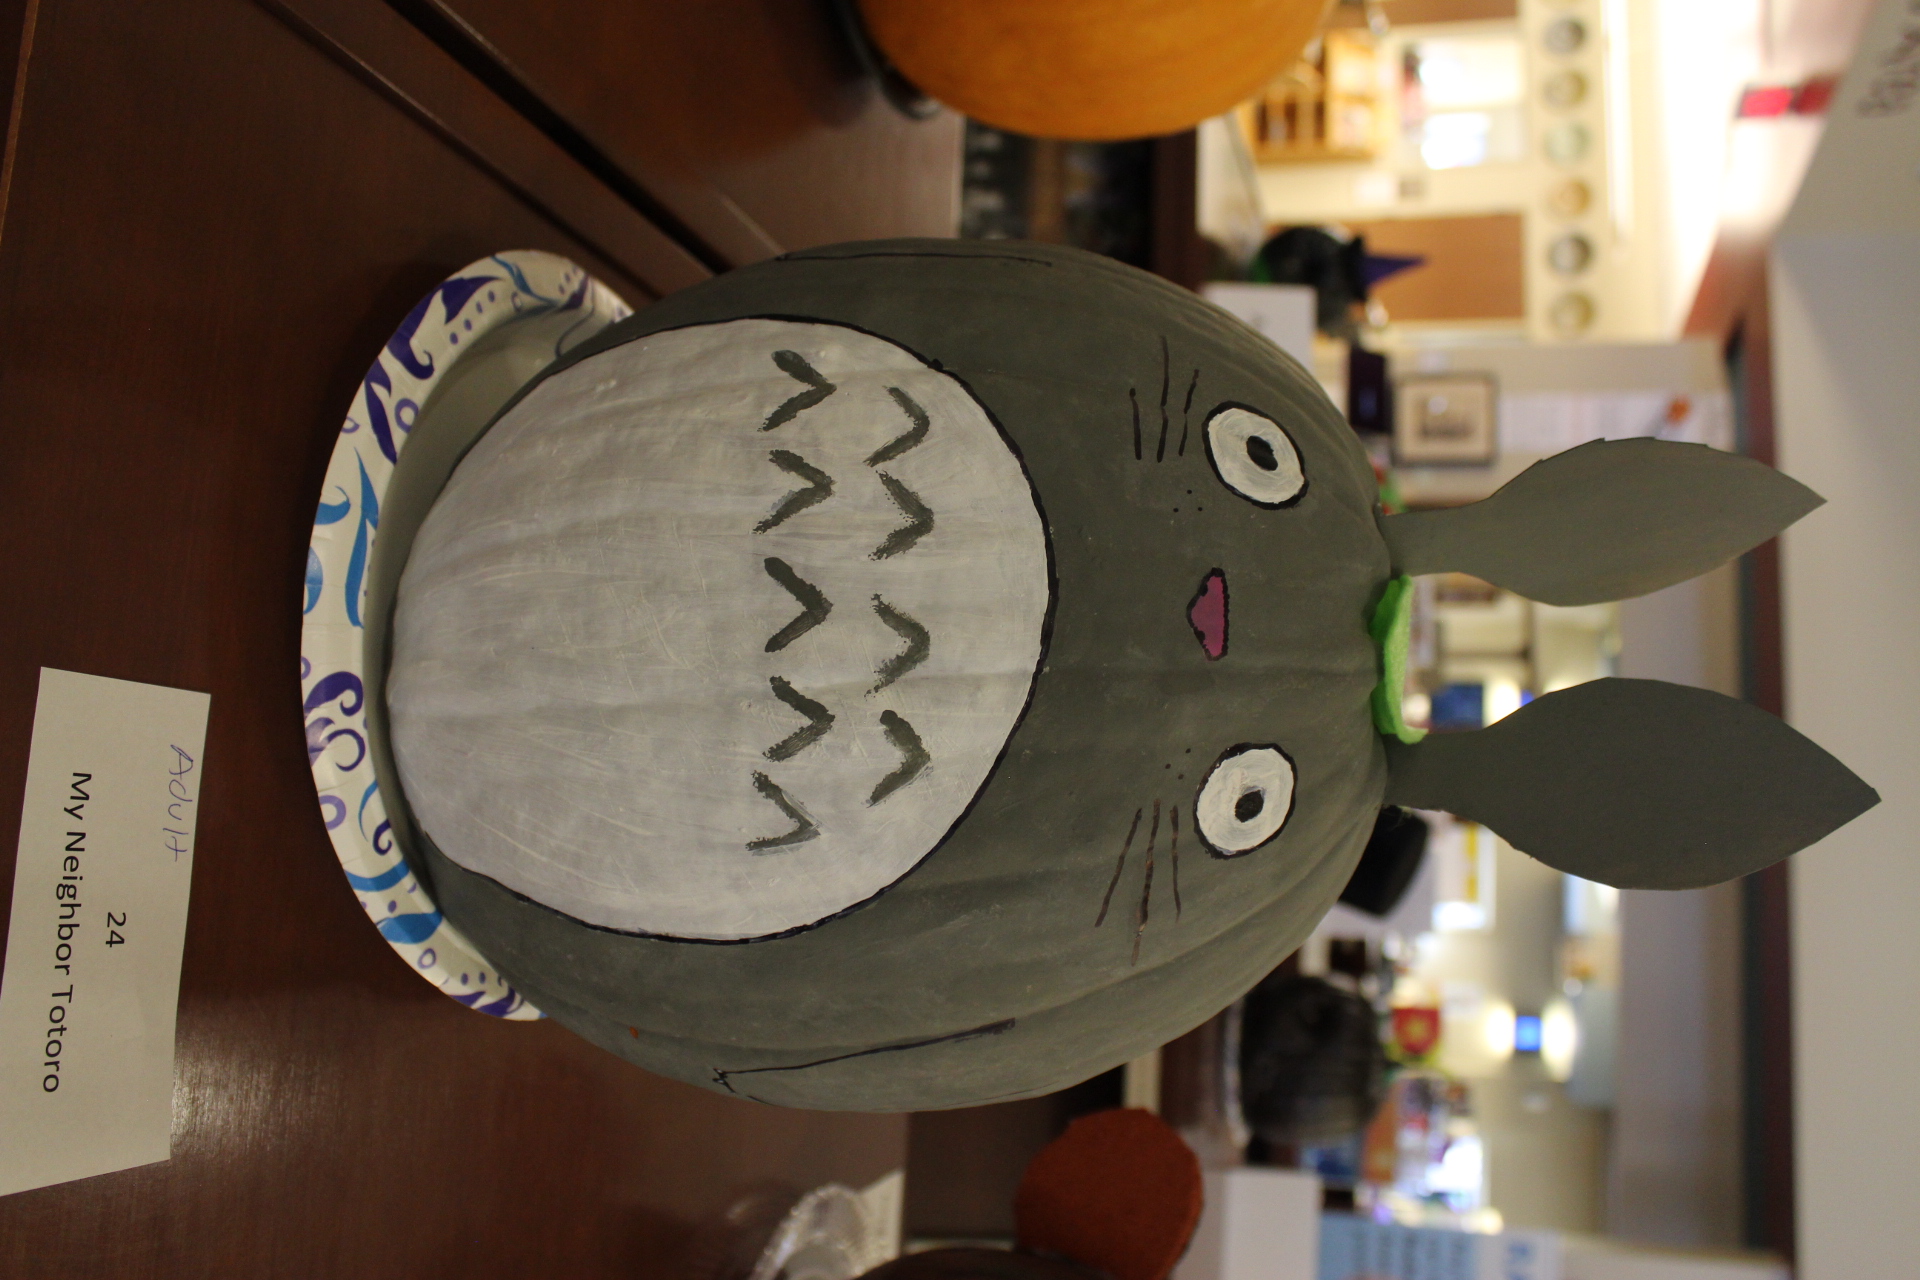 Pumpkin decorated as "My Neighbor Totoro"